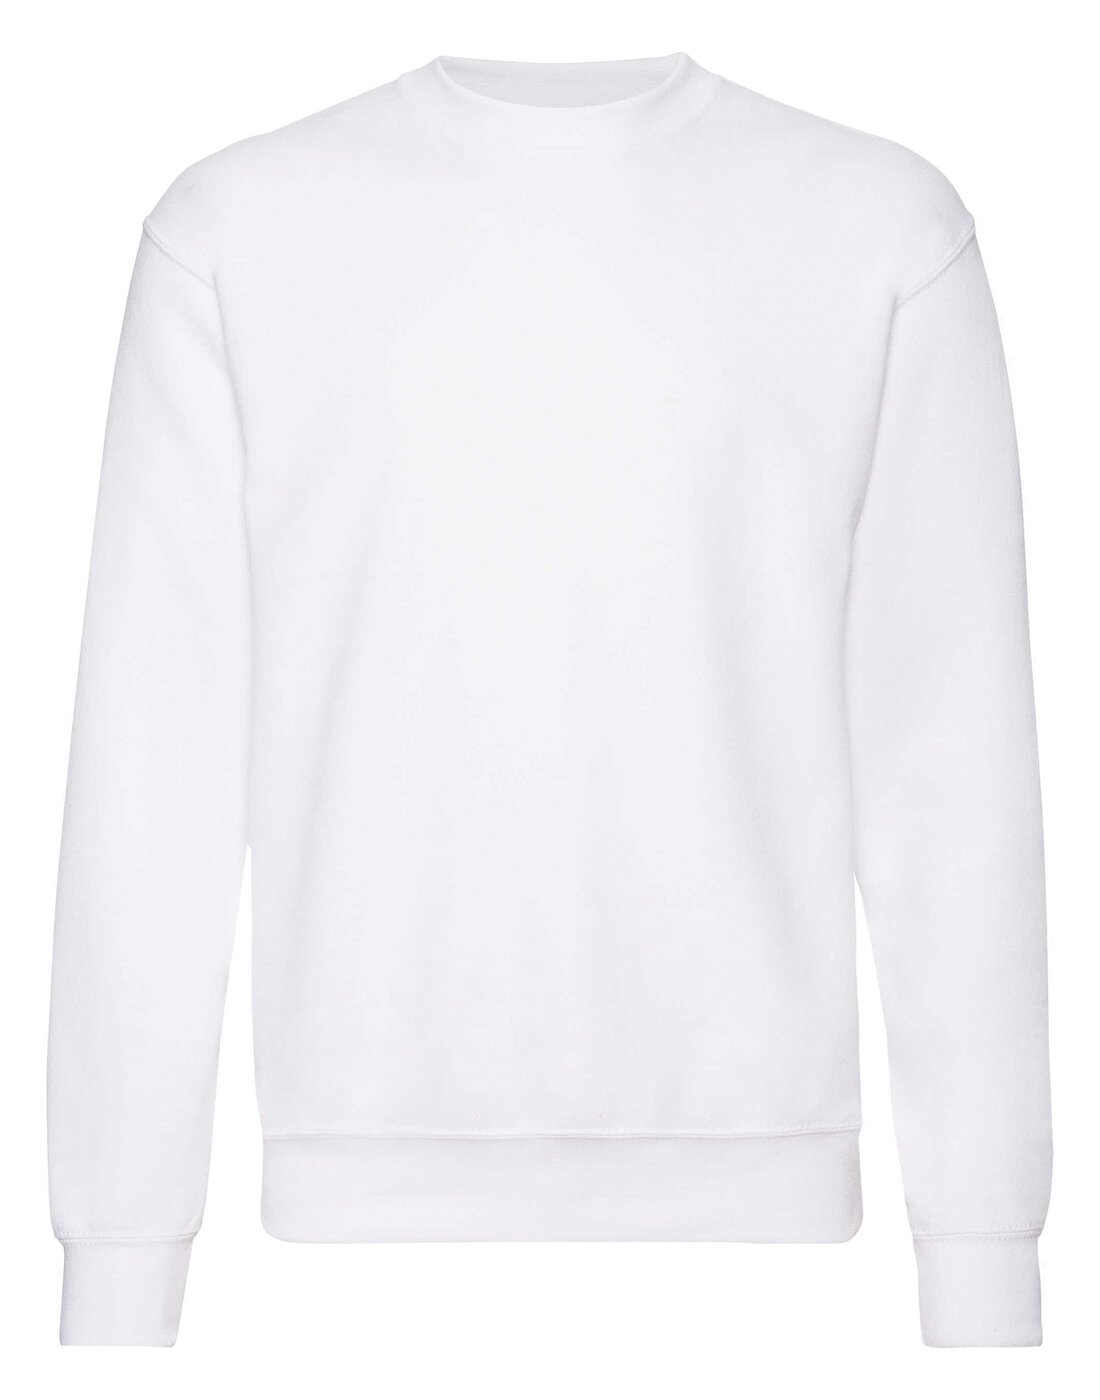 Fruit of the Loom Classic Set-In Sweatshirt - White